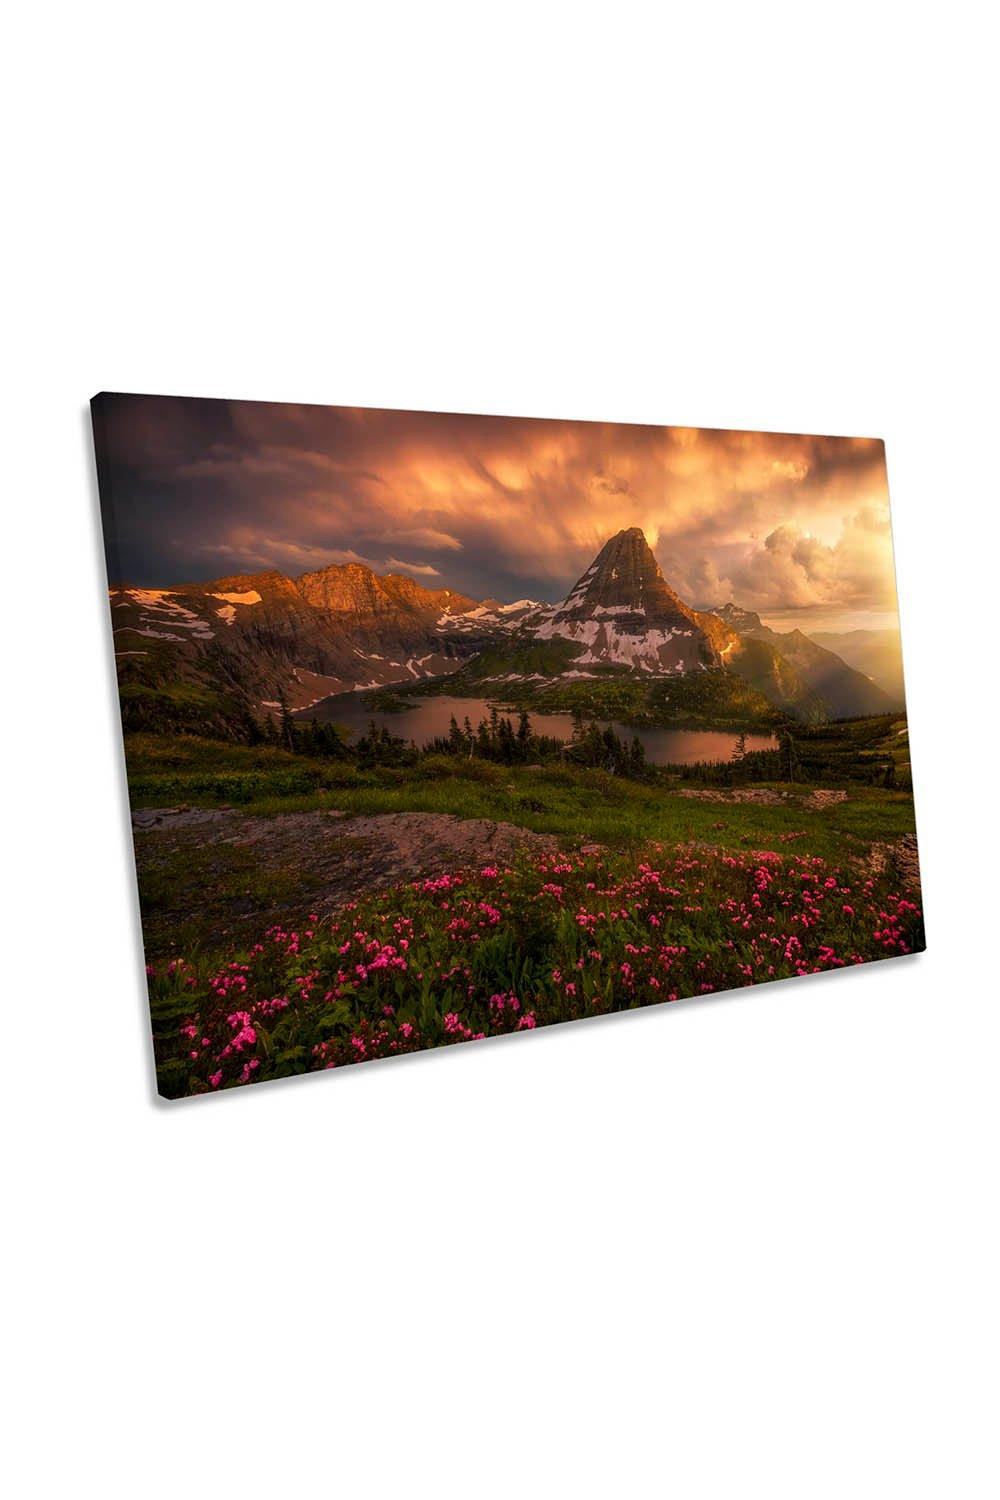 Sunstorm Wildflowers Mountain Landscape Canvas Wall Art Picture Print